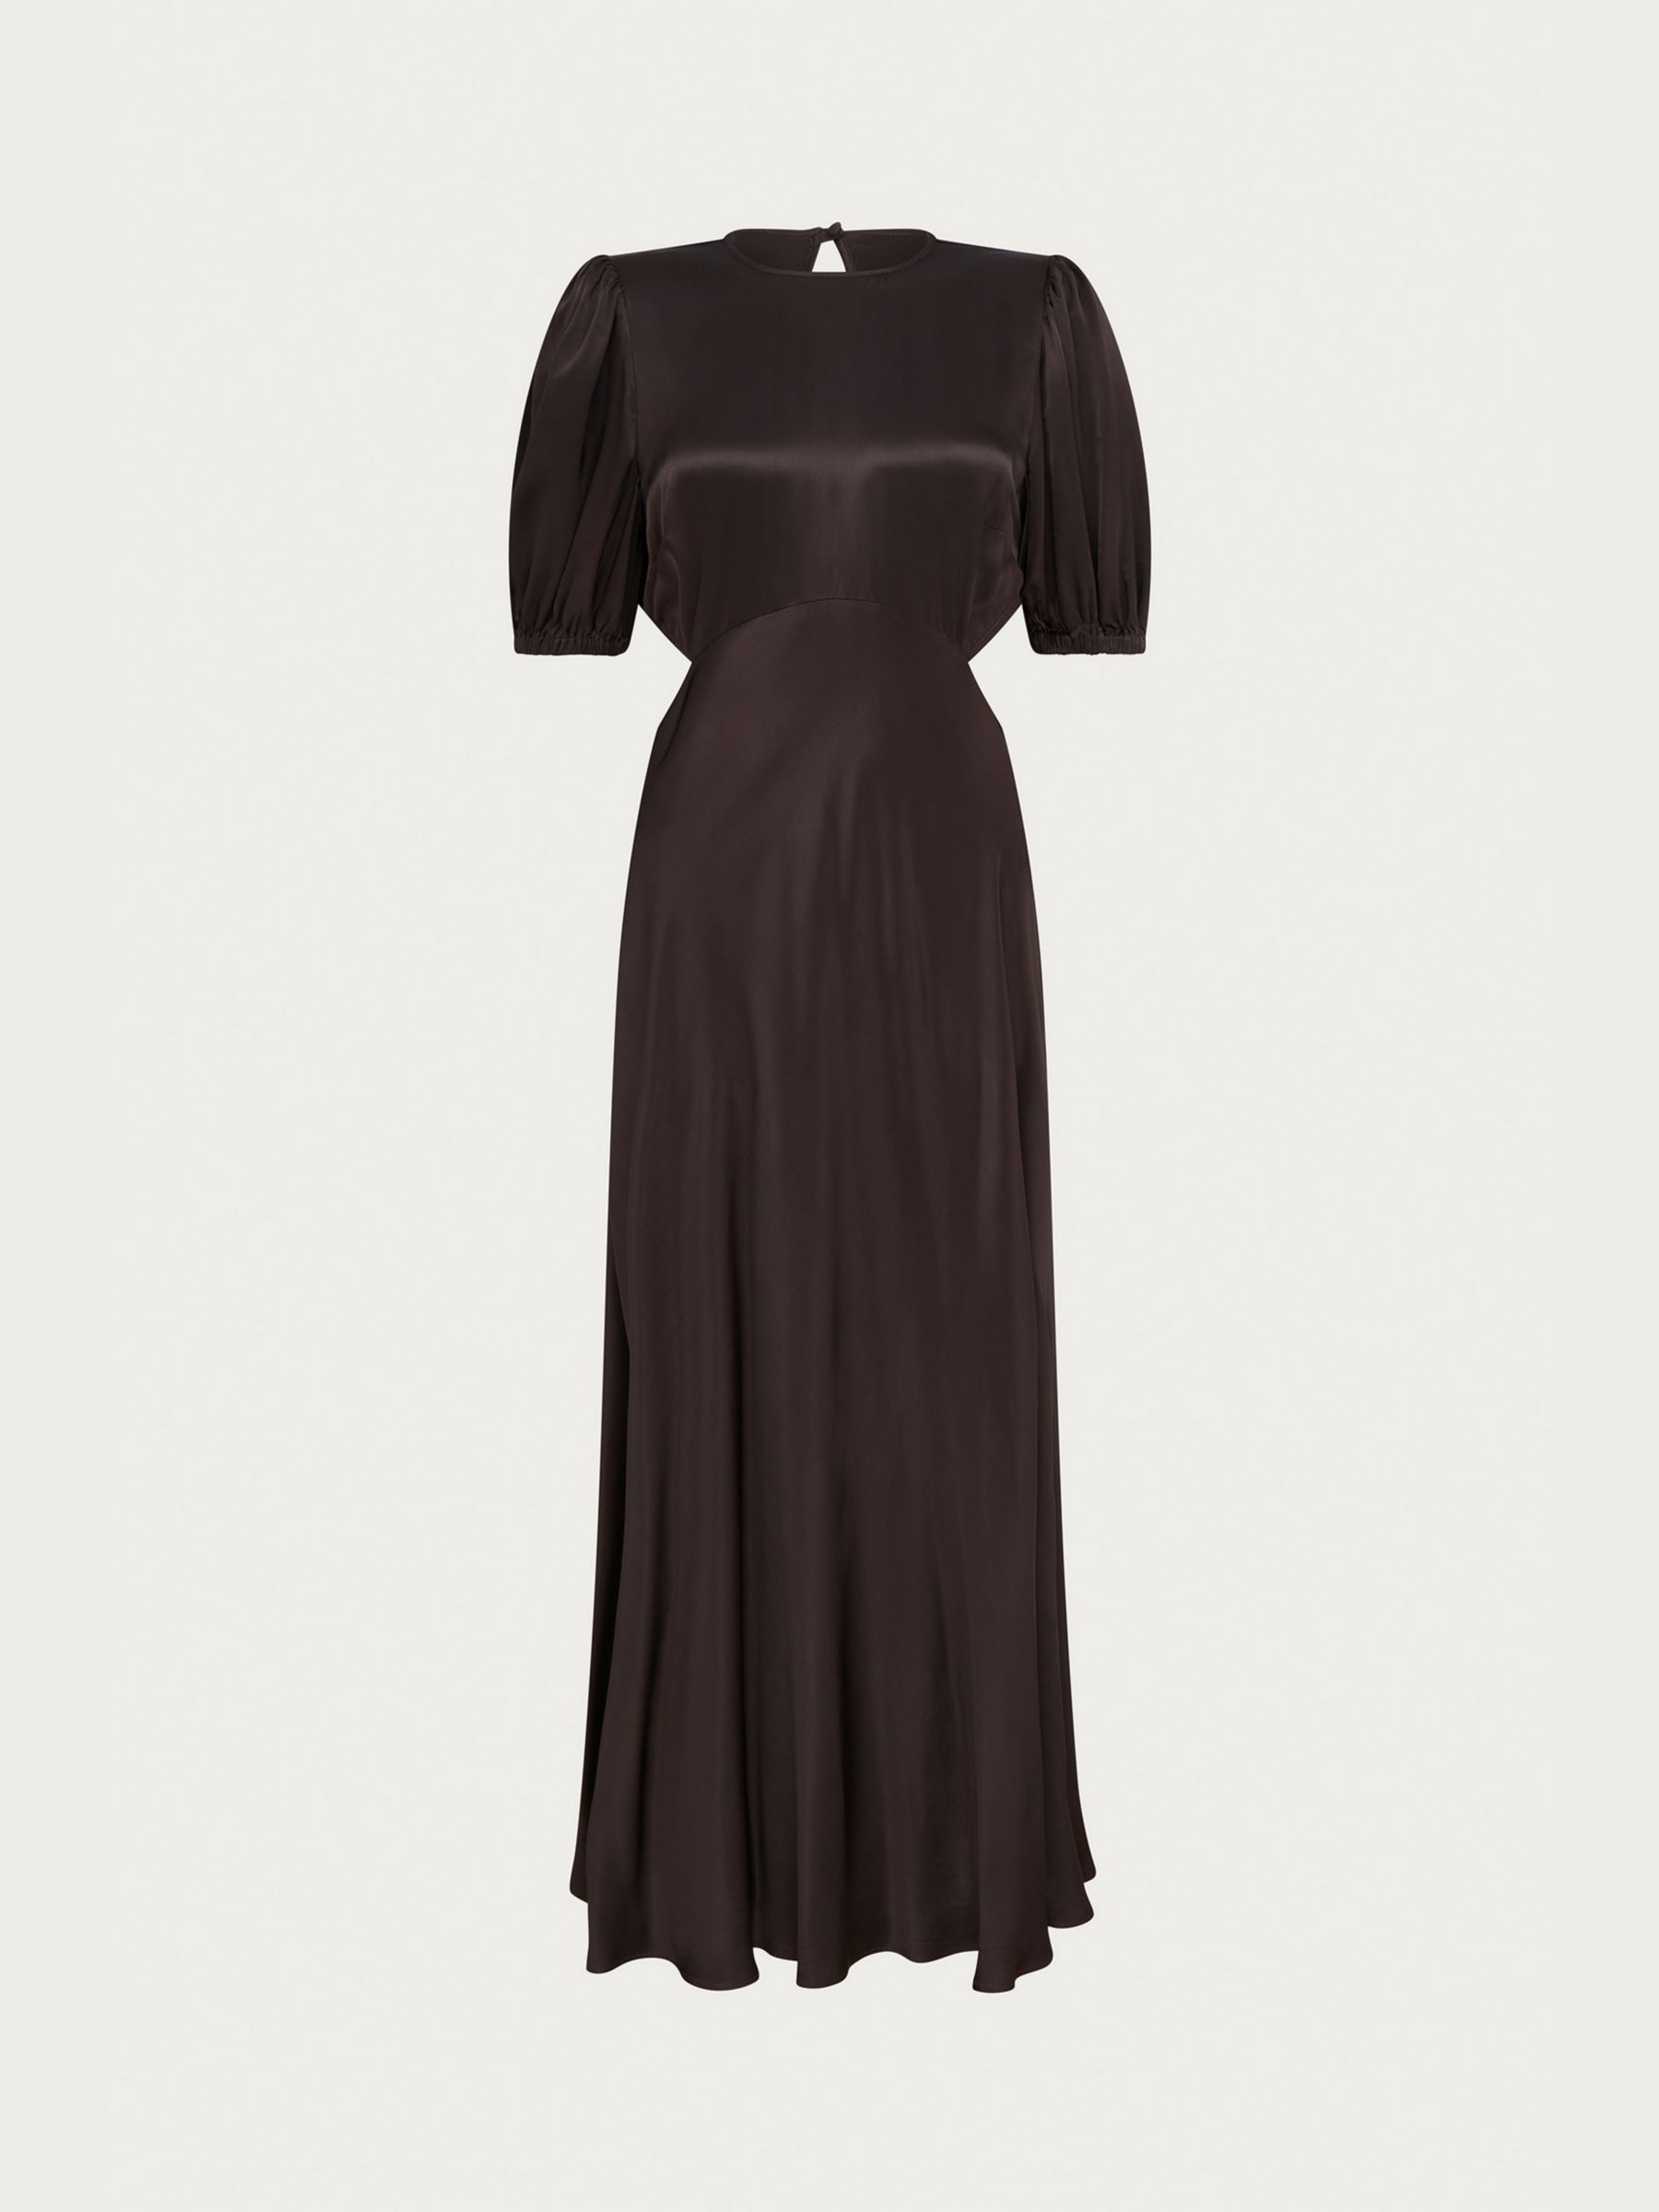 Ghost Amber Satin Keyhole Dress, Dark Chocolate at John Lewis & Partners